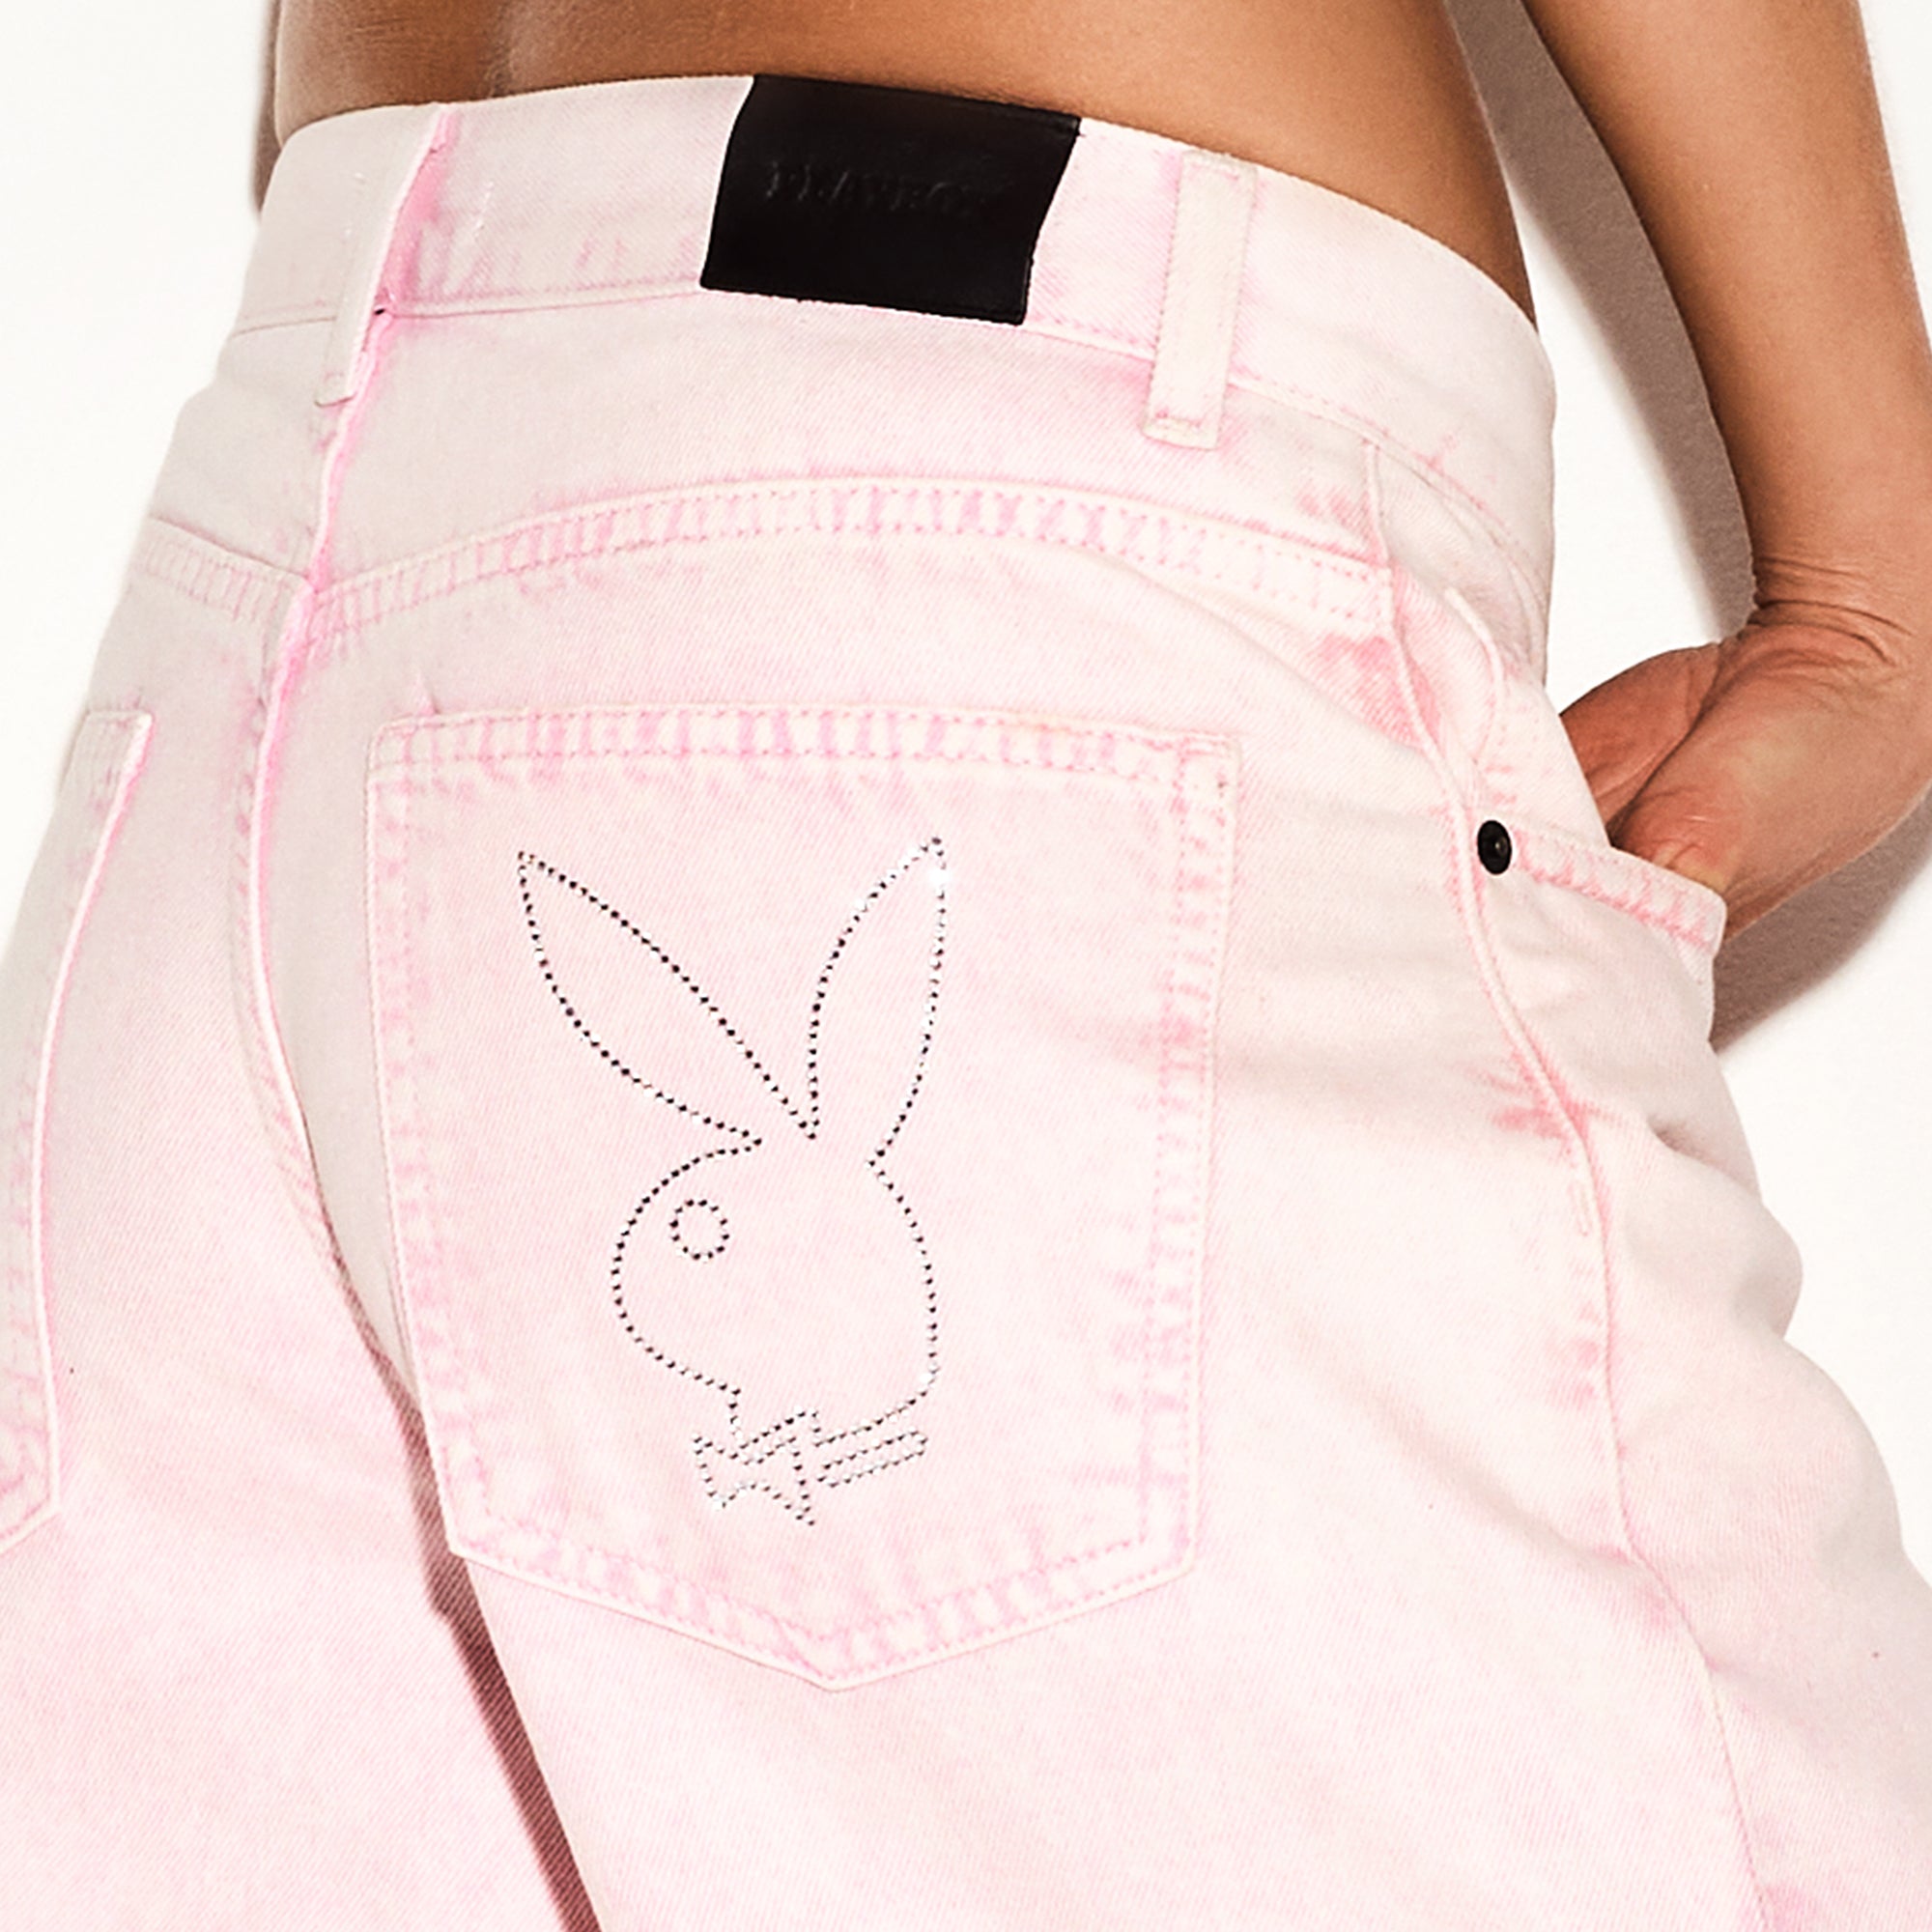 Baggy Denim Pants: Daring Women's Bunny Heart Pants by Playboy